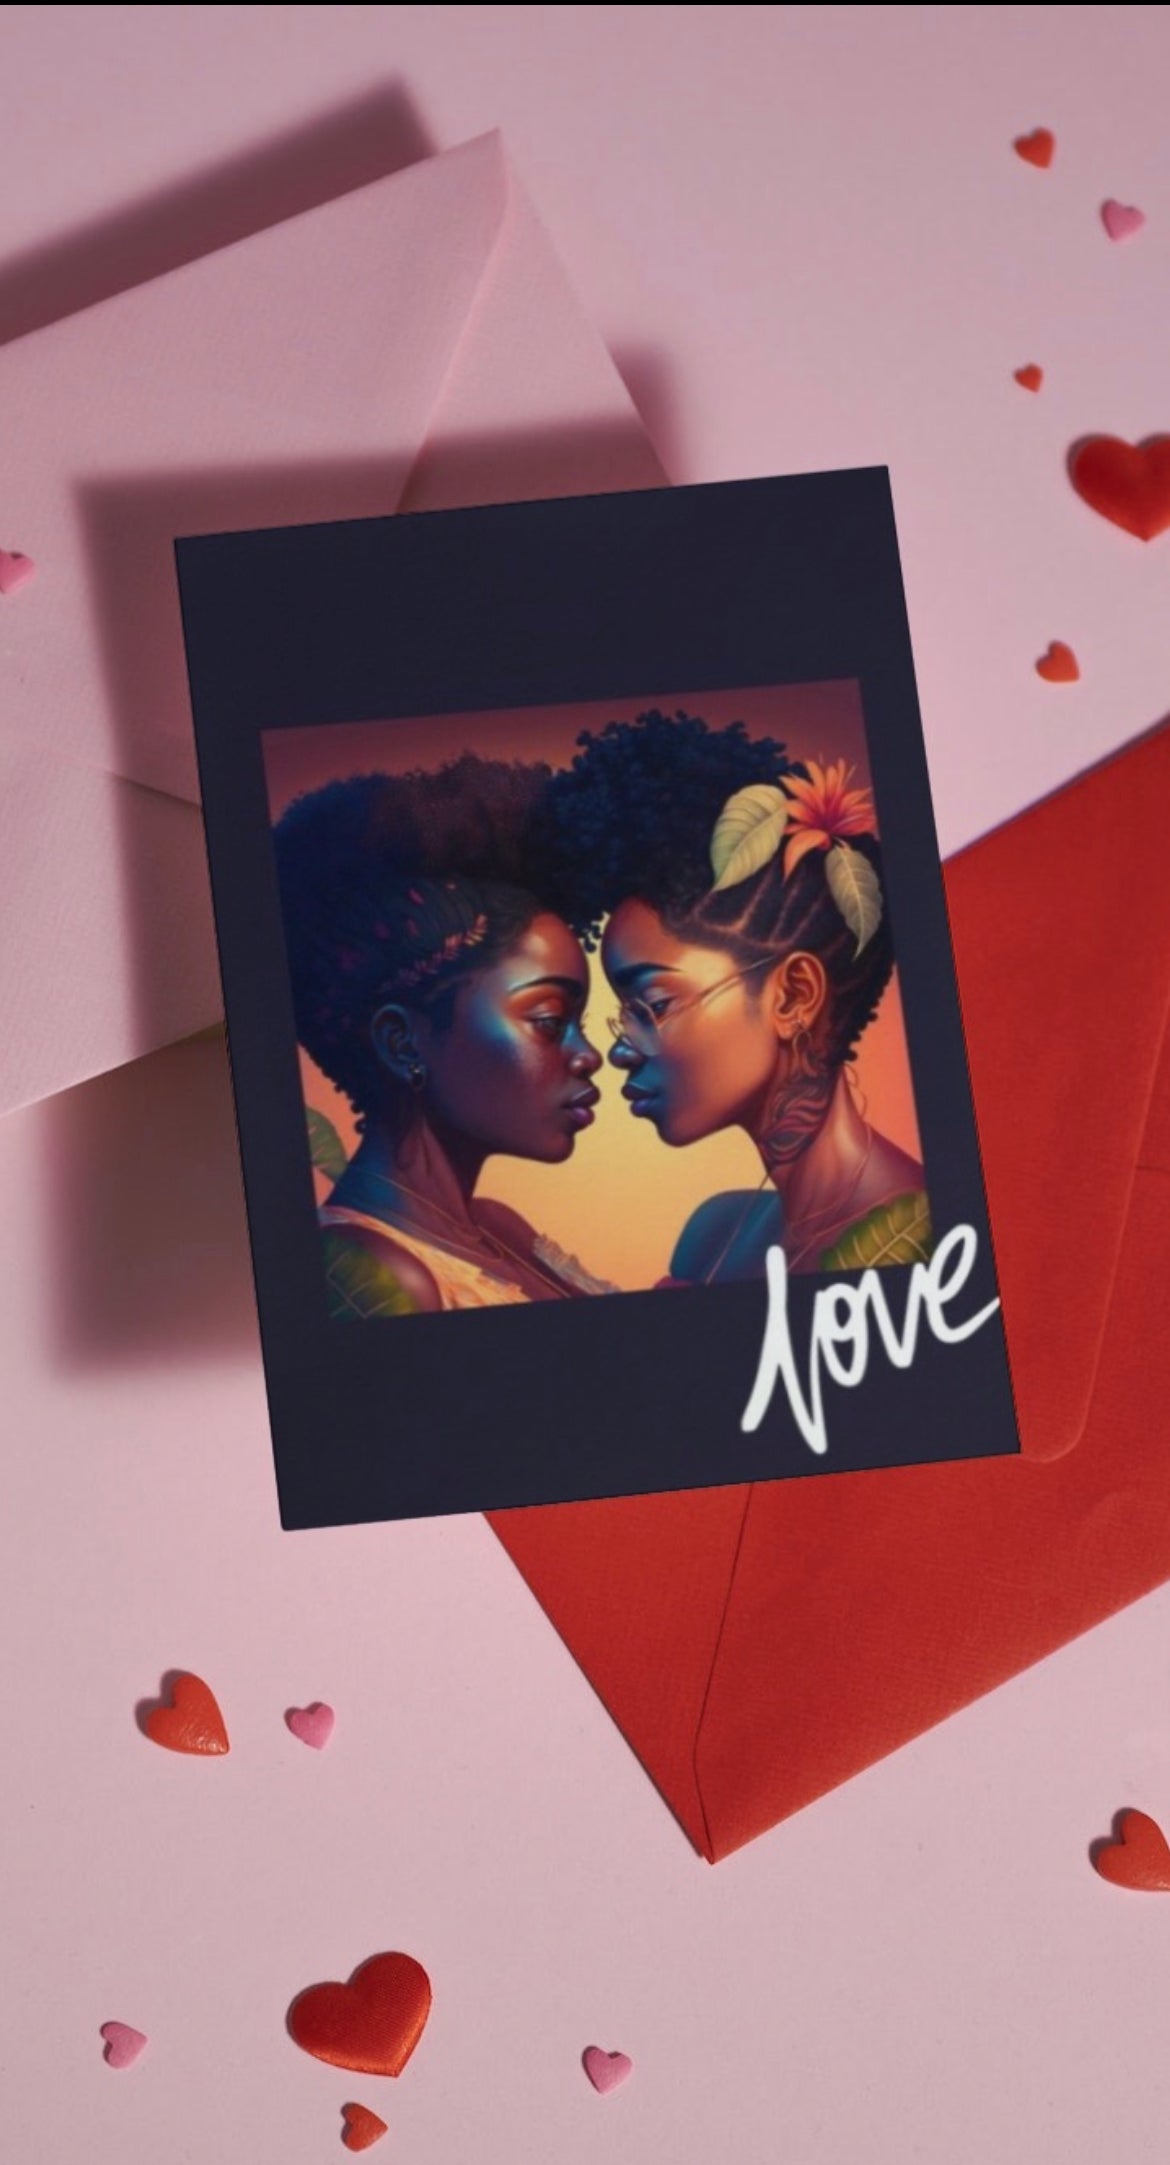 “Me and My Girlfriend” LGBTQ2+ Valentines Greeting Card